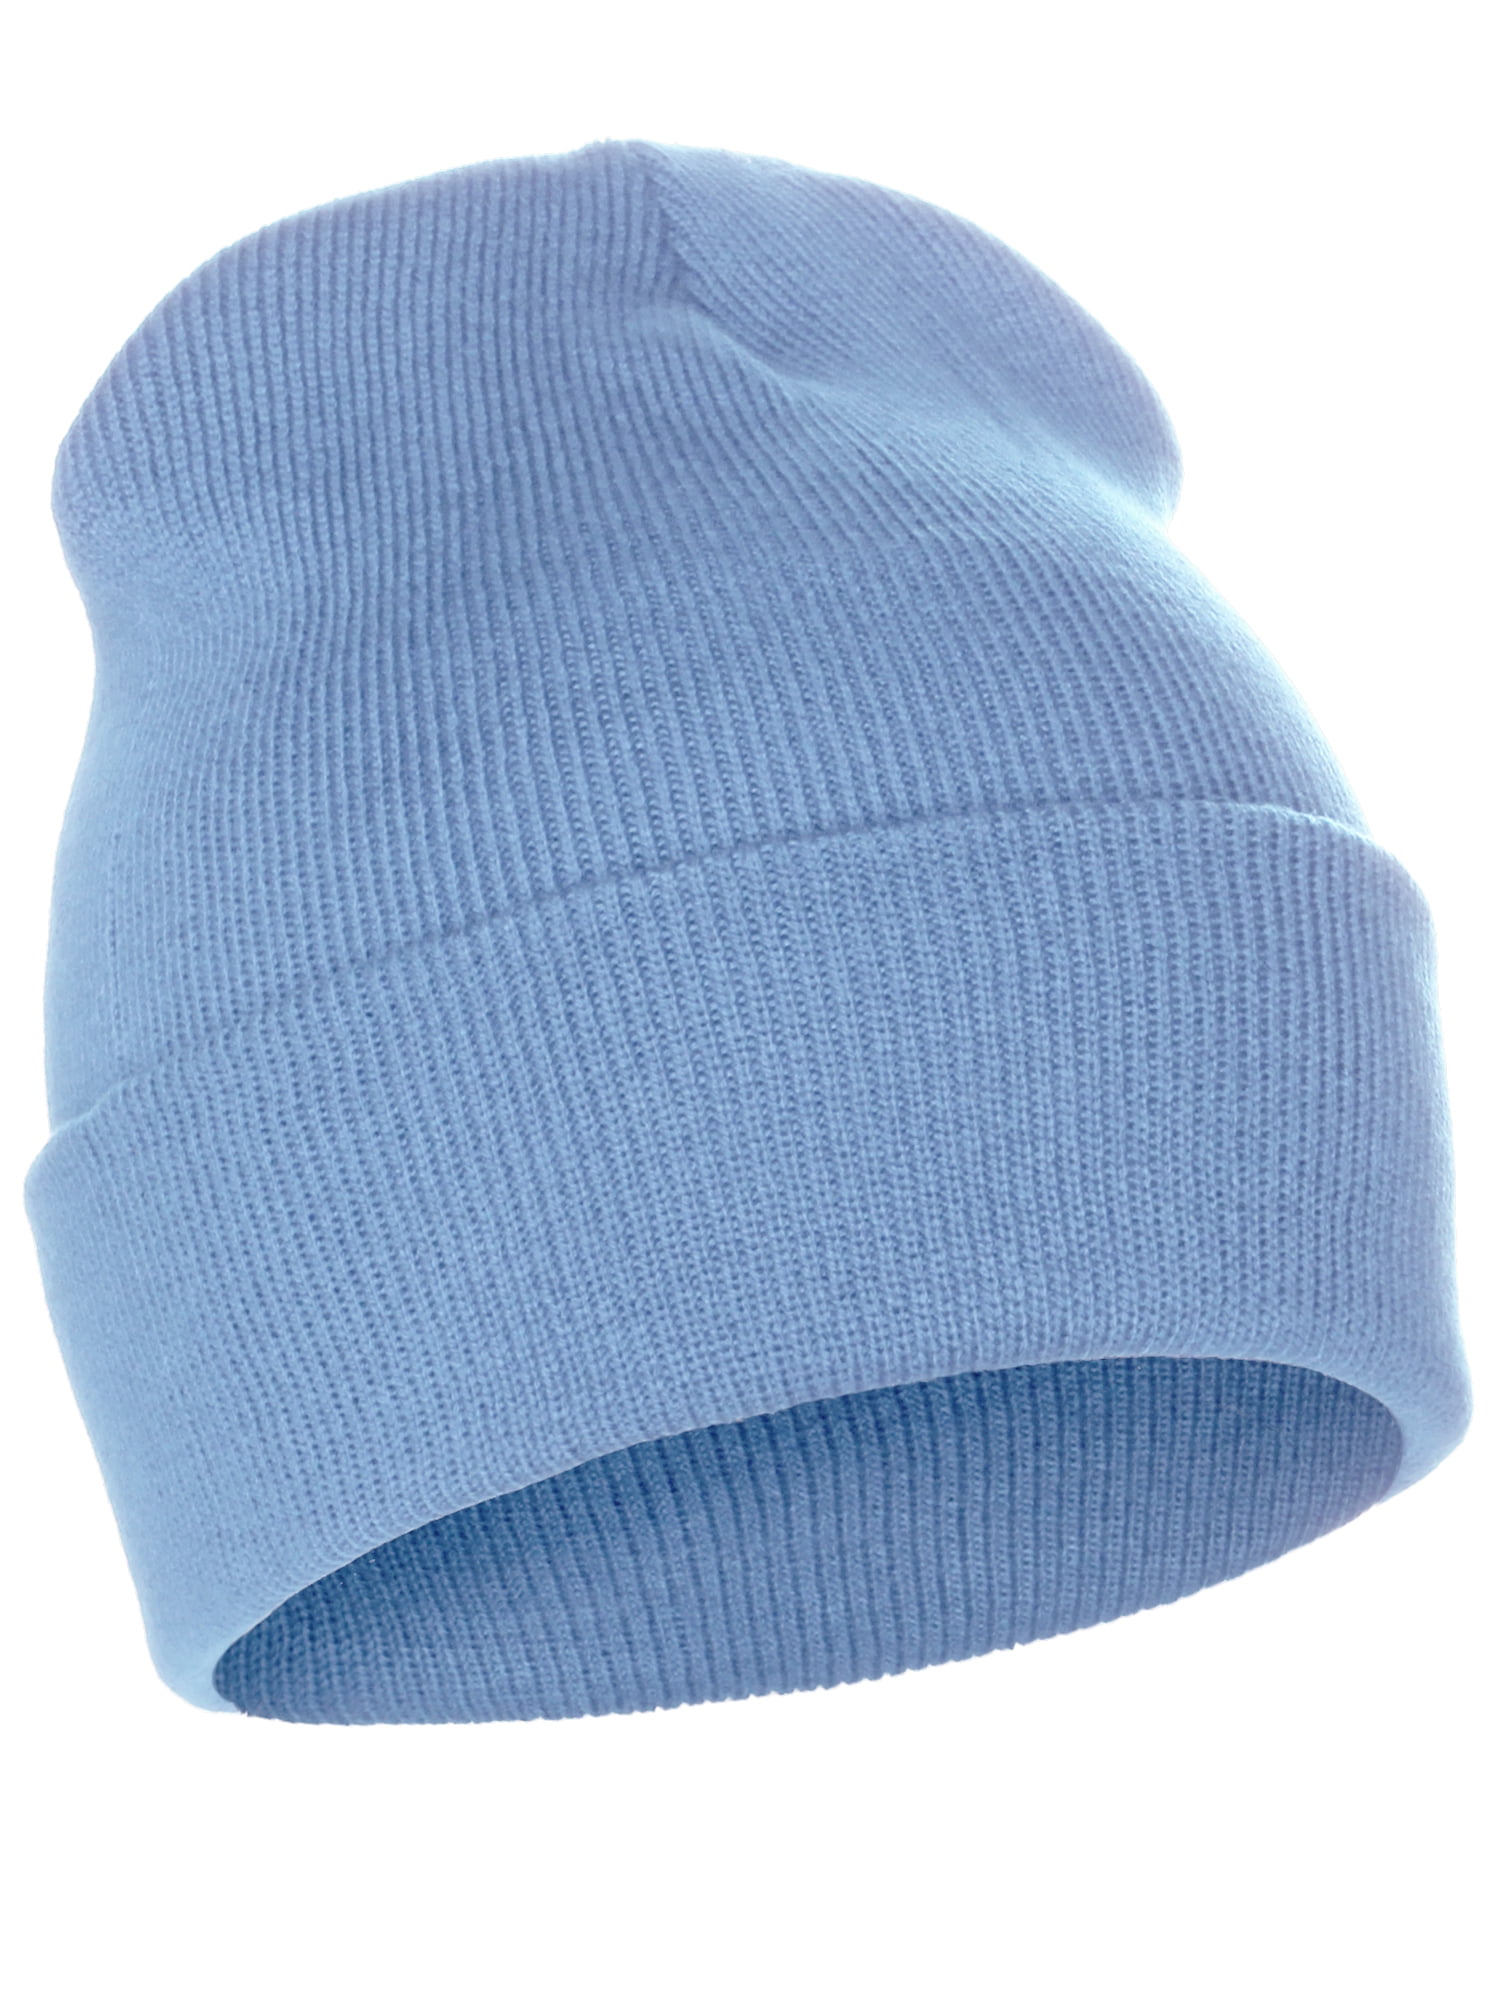 Classic Plain Cuffed Beanie Knit Hat Skully Cap, Sky Blue - Walmart.com